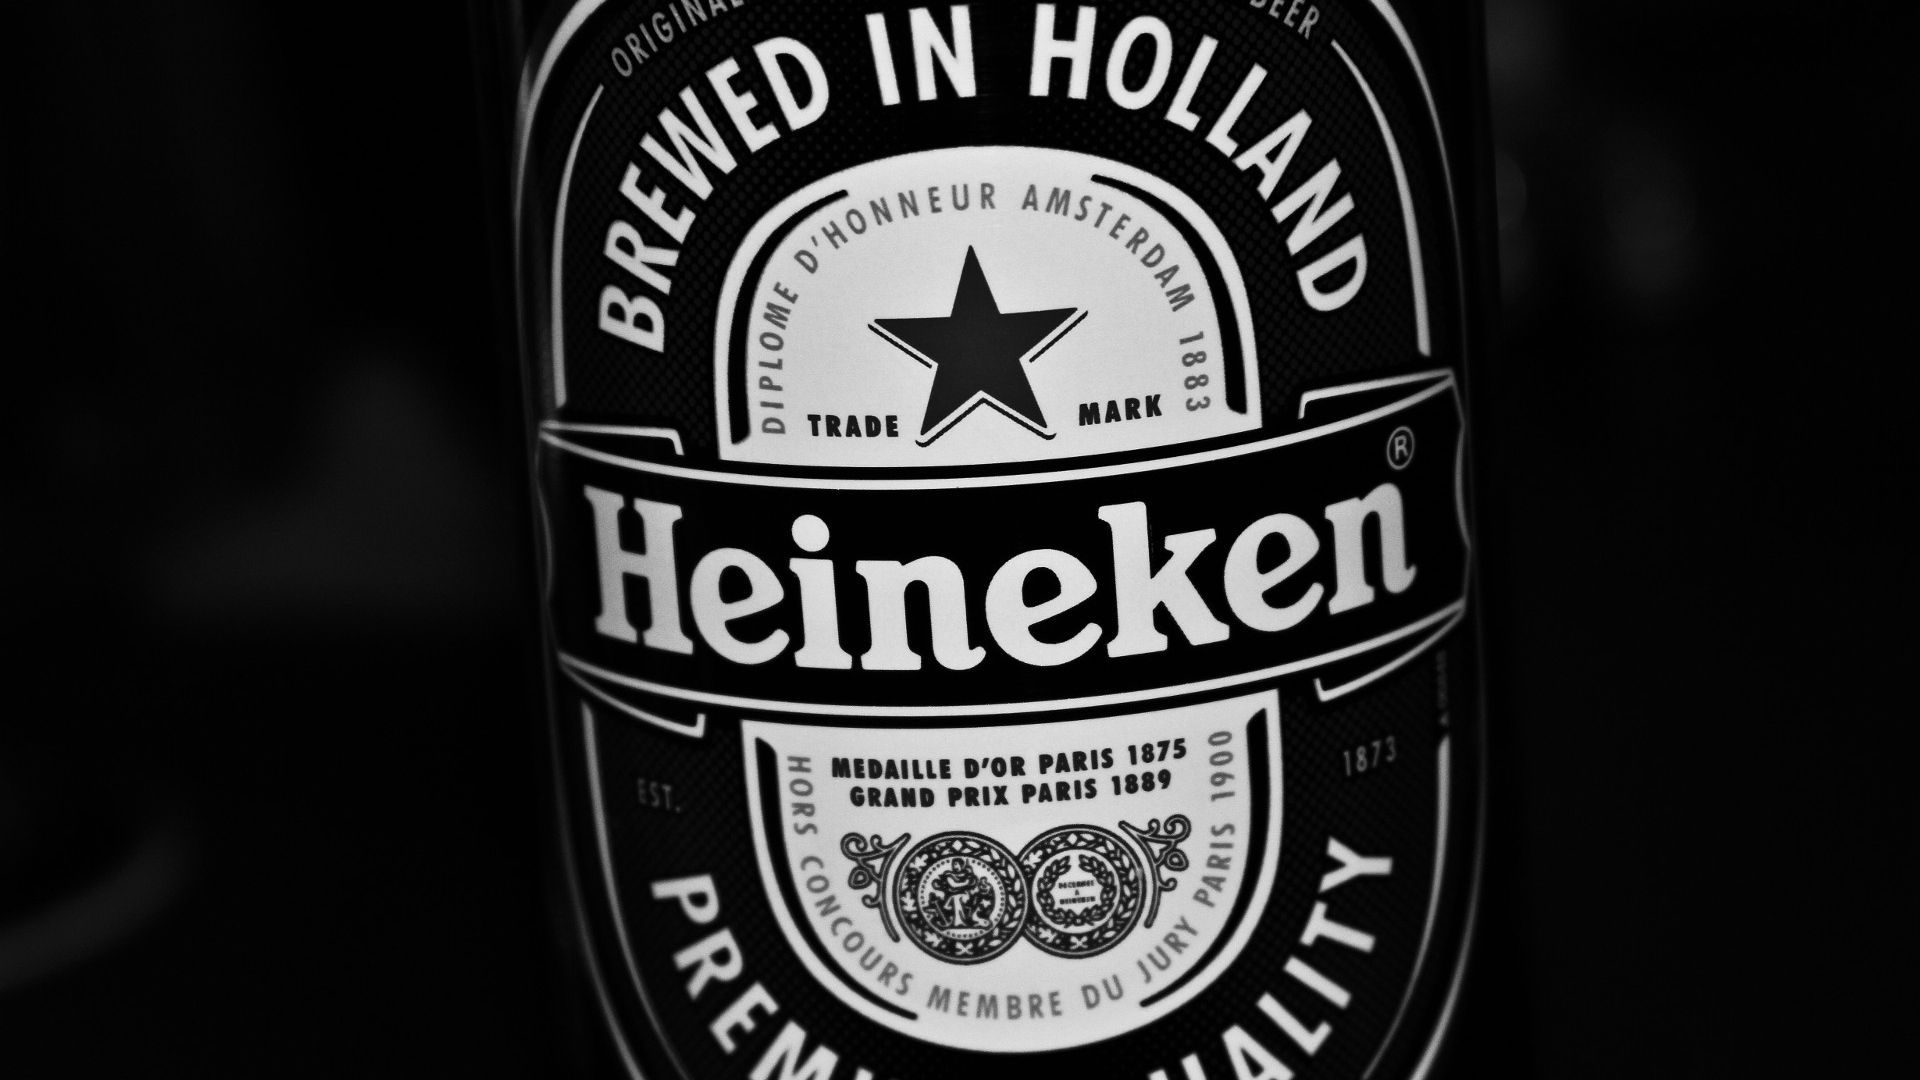 heineken beer bottle brand alcohol HD wallpaper. Heineken, Heineken beer bottle, Heineken beer